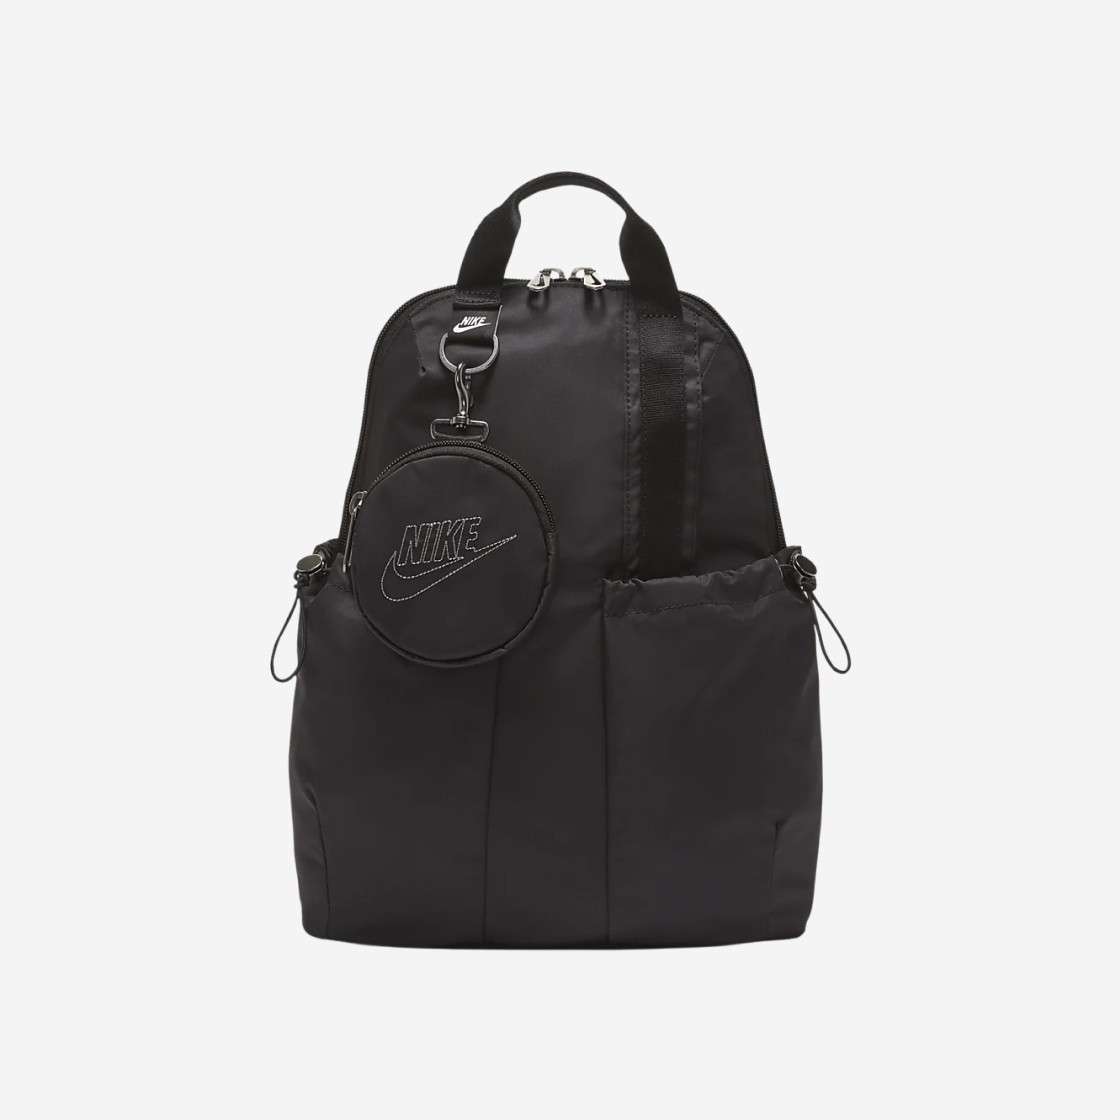 Nike Sportswear Futura Luxe Mini Backpack in Navy